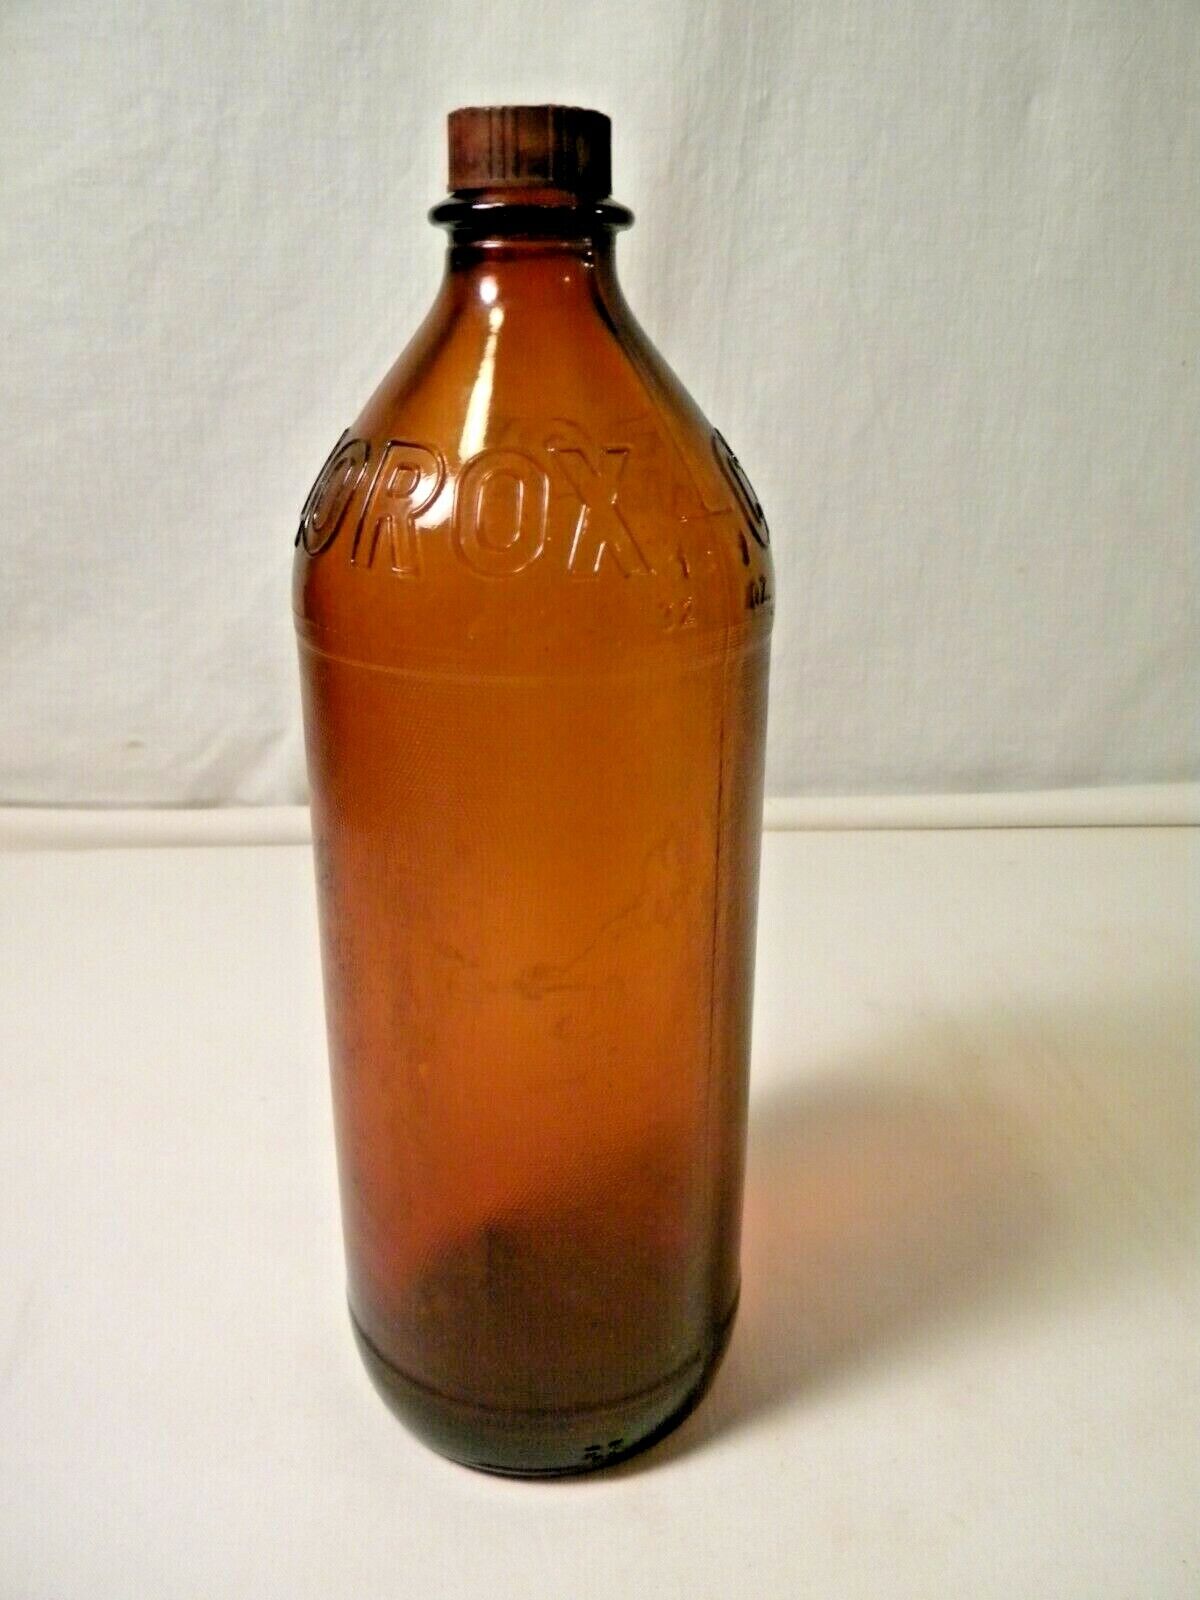 old brown clorox bottle price